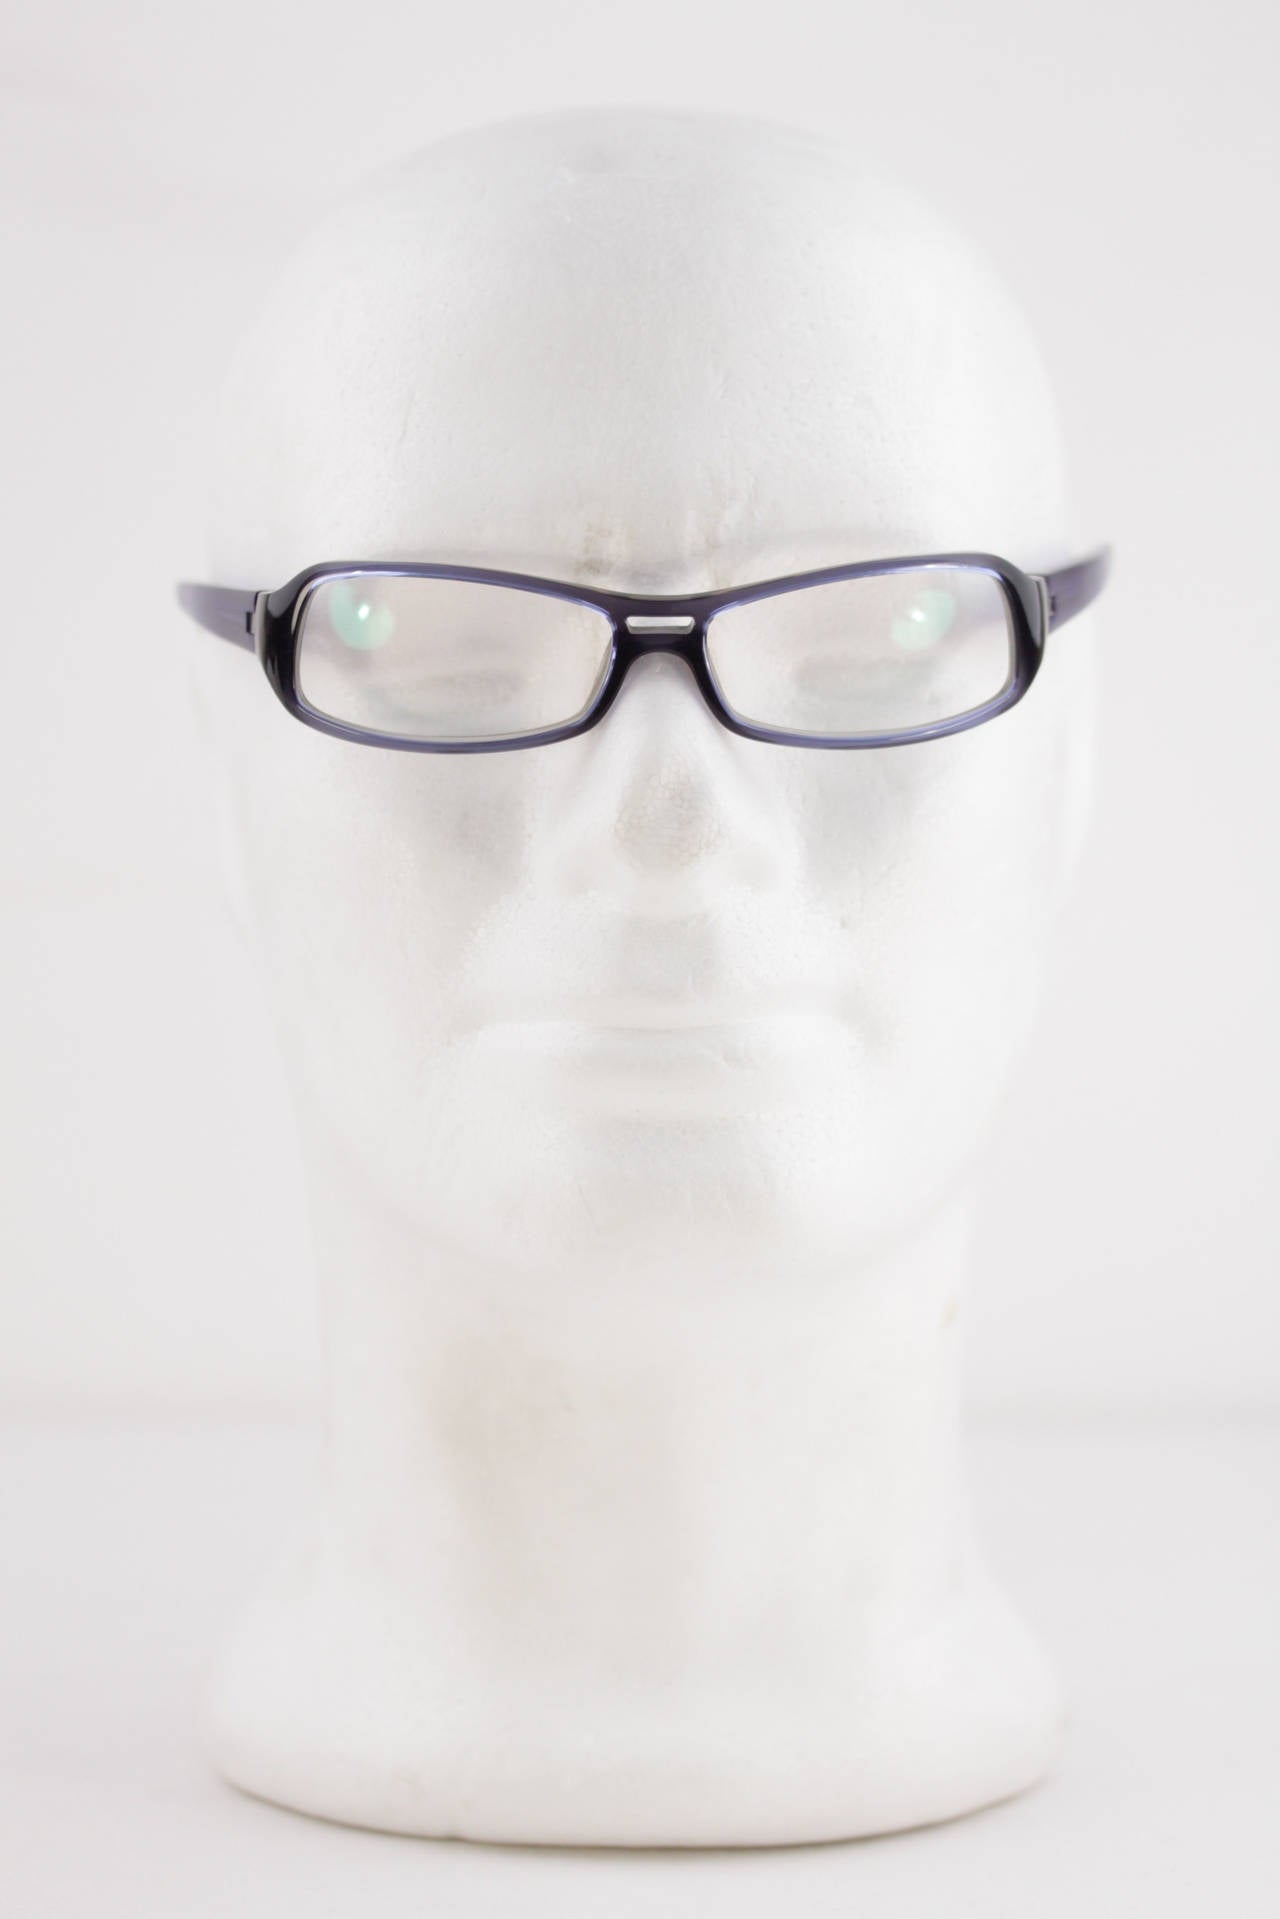 ALAIN MIKLI STARCK Blue EYEGLASSES BIOCITY P0655 54/14 125 Frame unisex eyewear 3